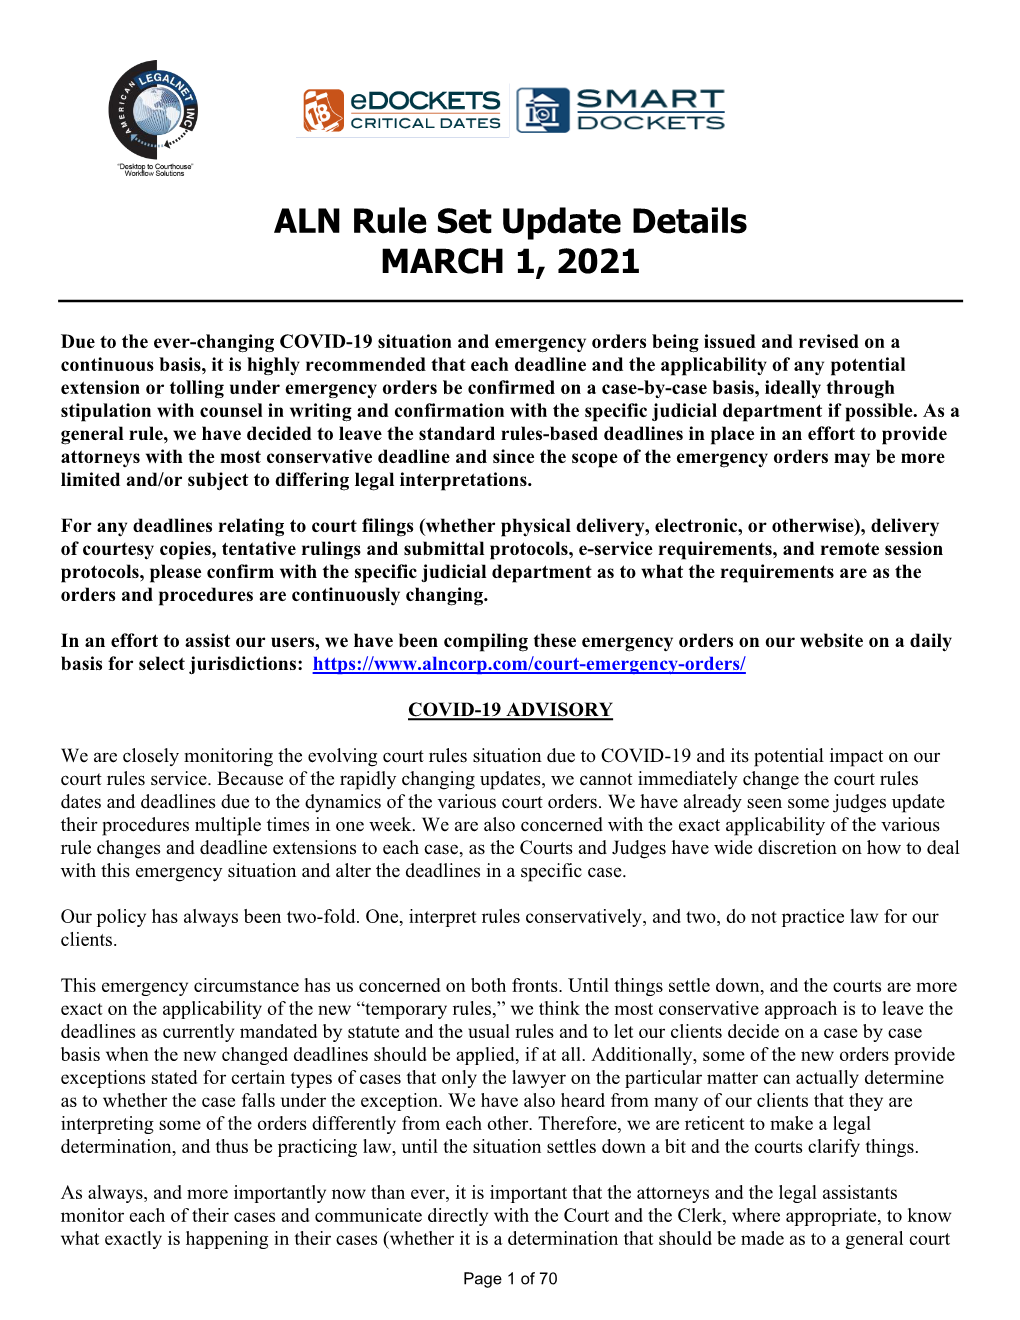 ALN Rule Set Update Details MARCH 1, 2021